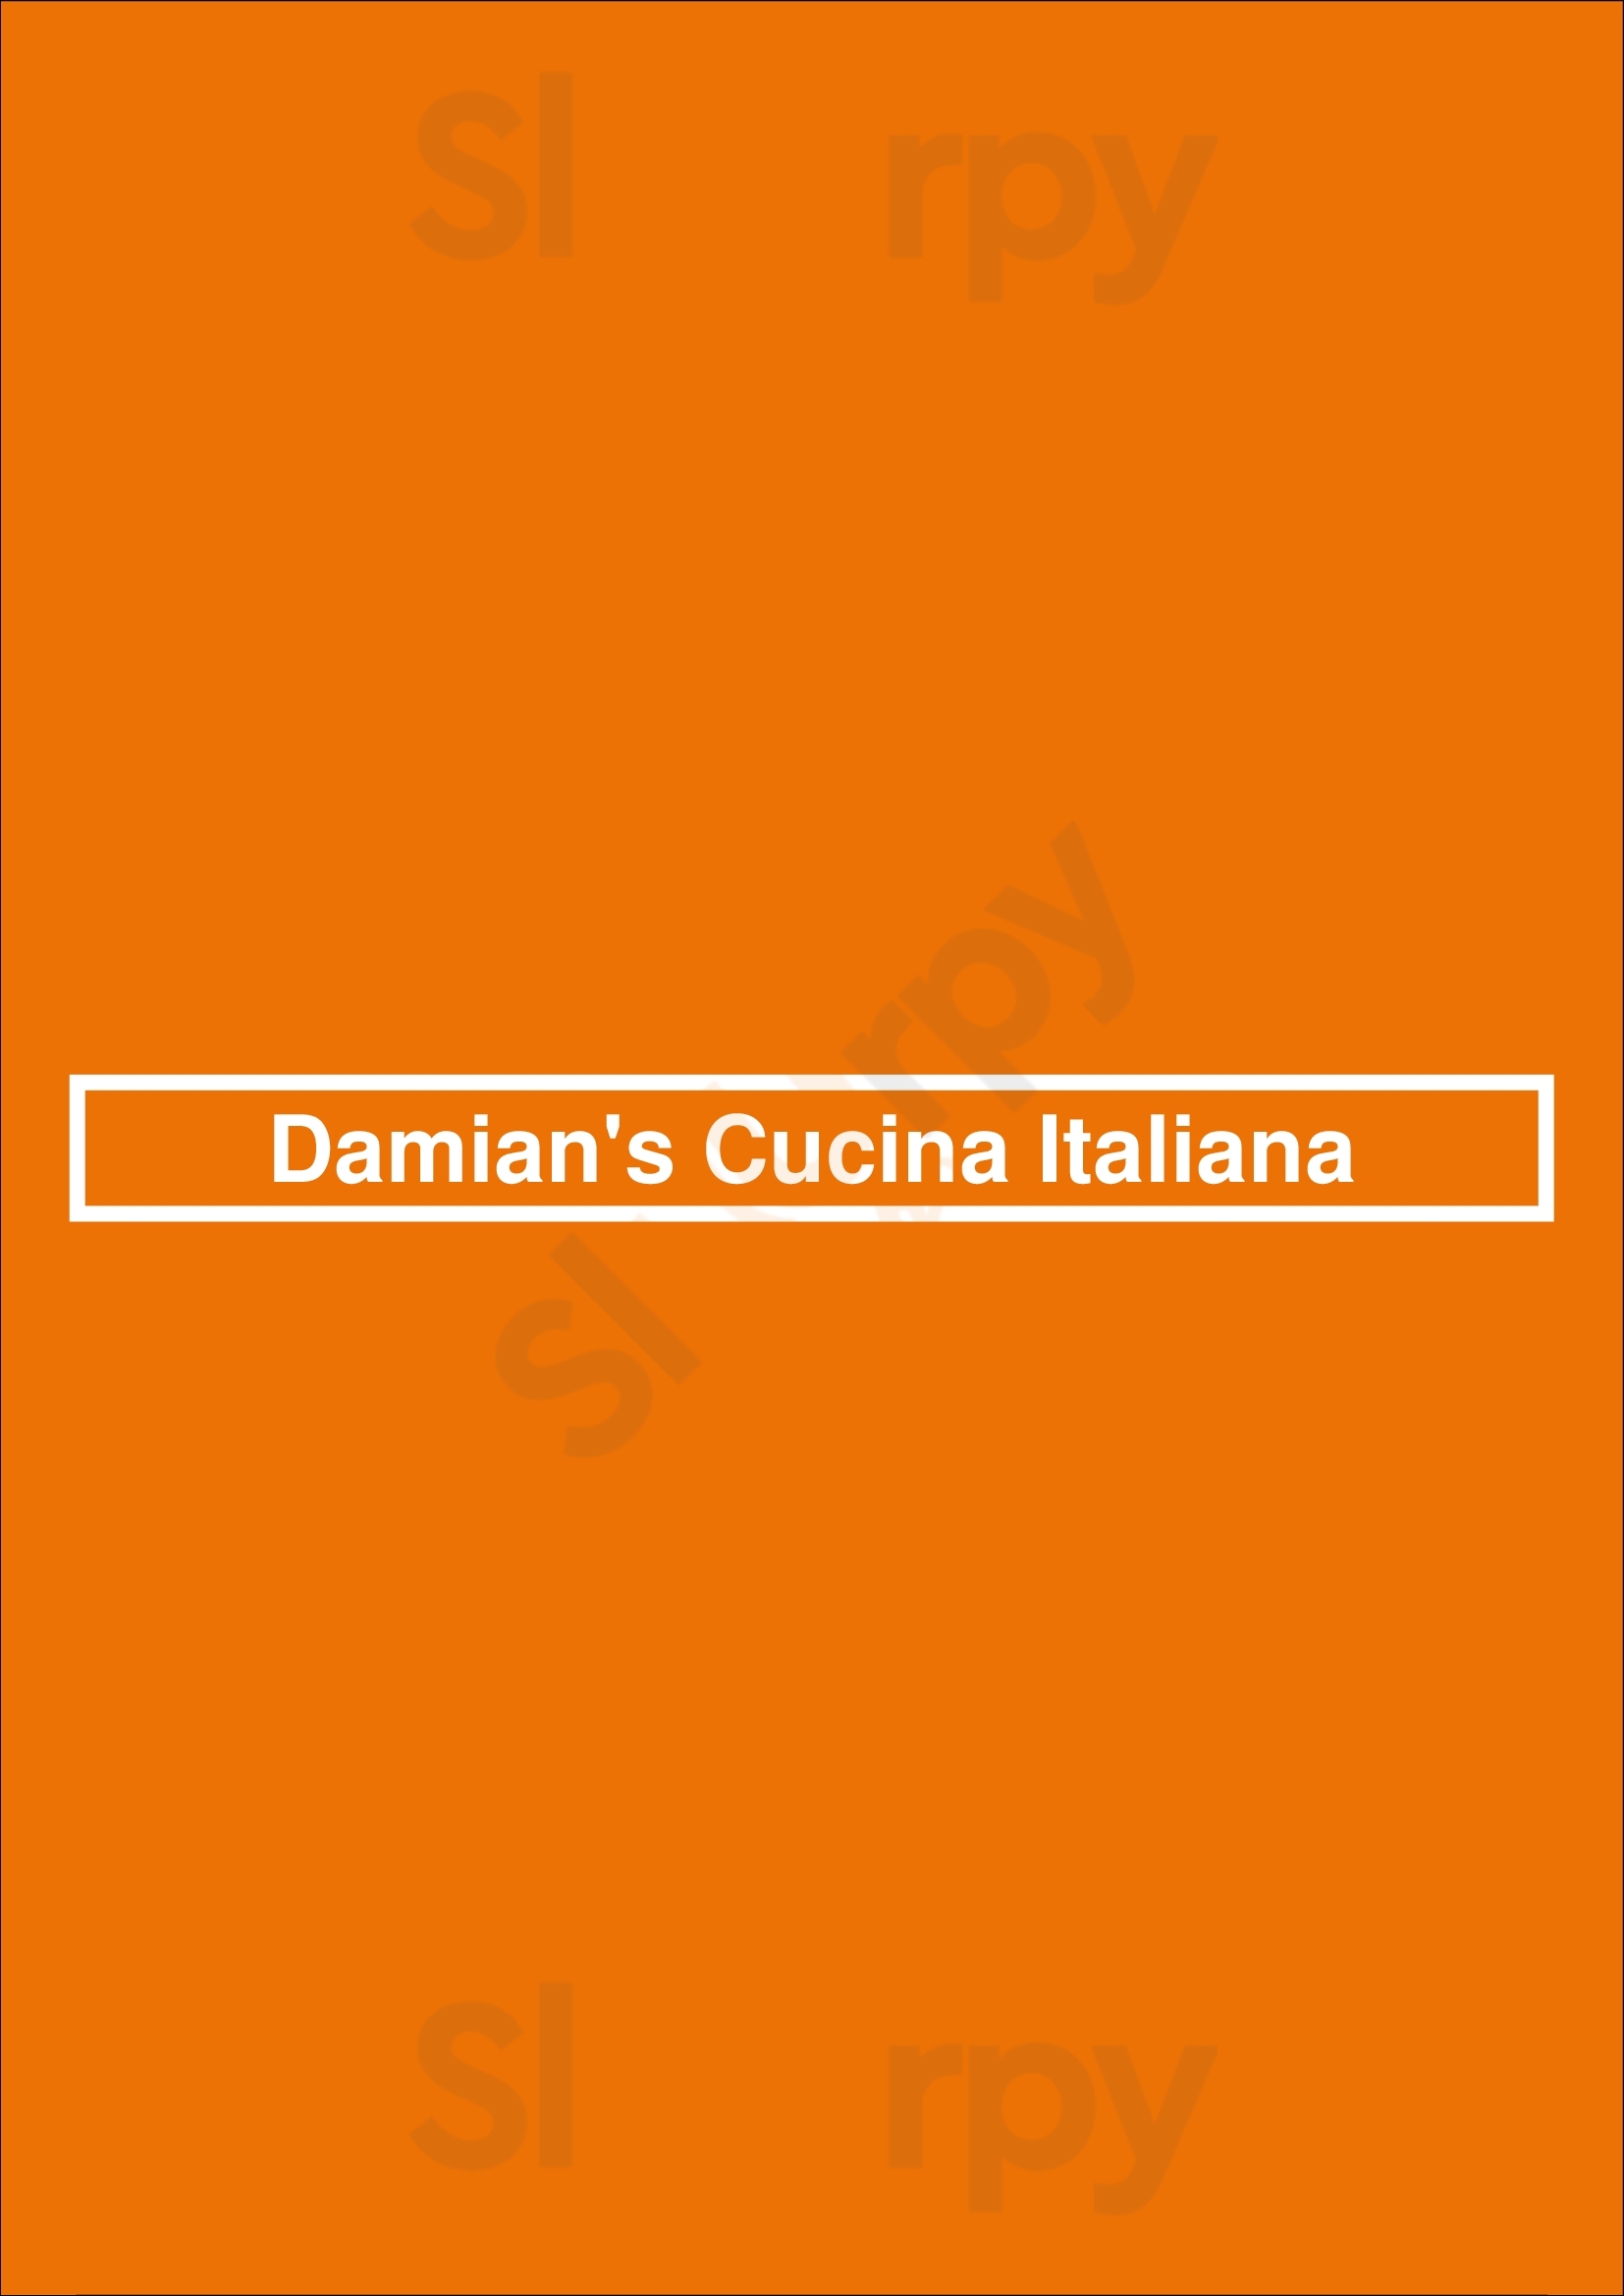 Damian's Cucina Italiana Houston Menu - 1